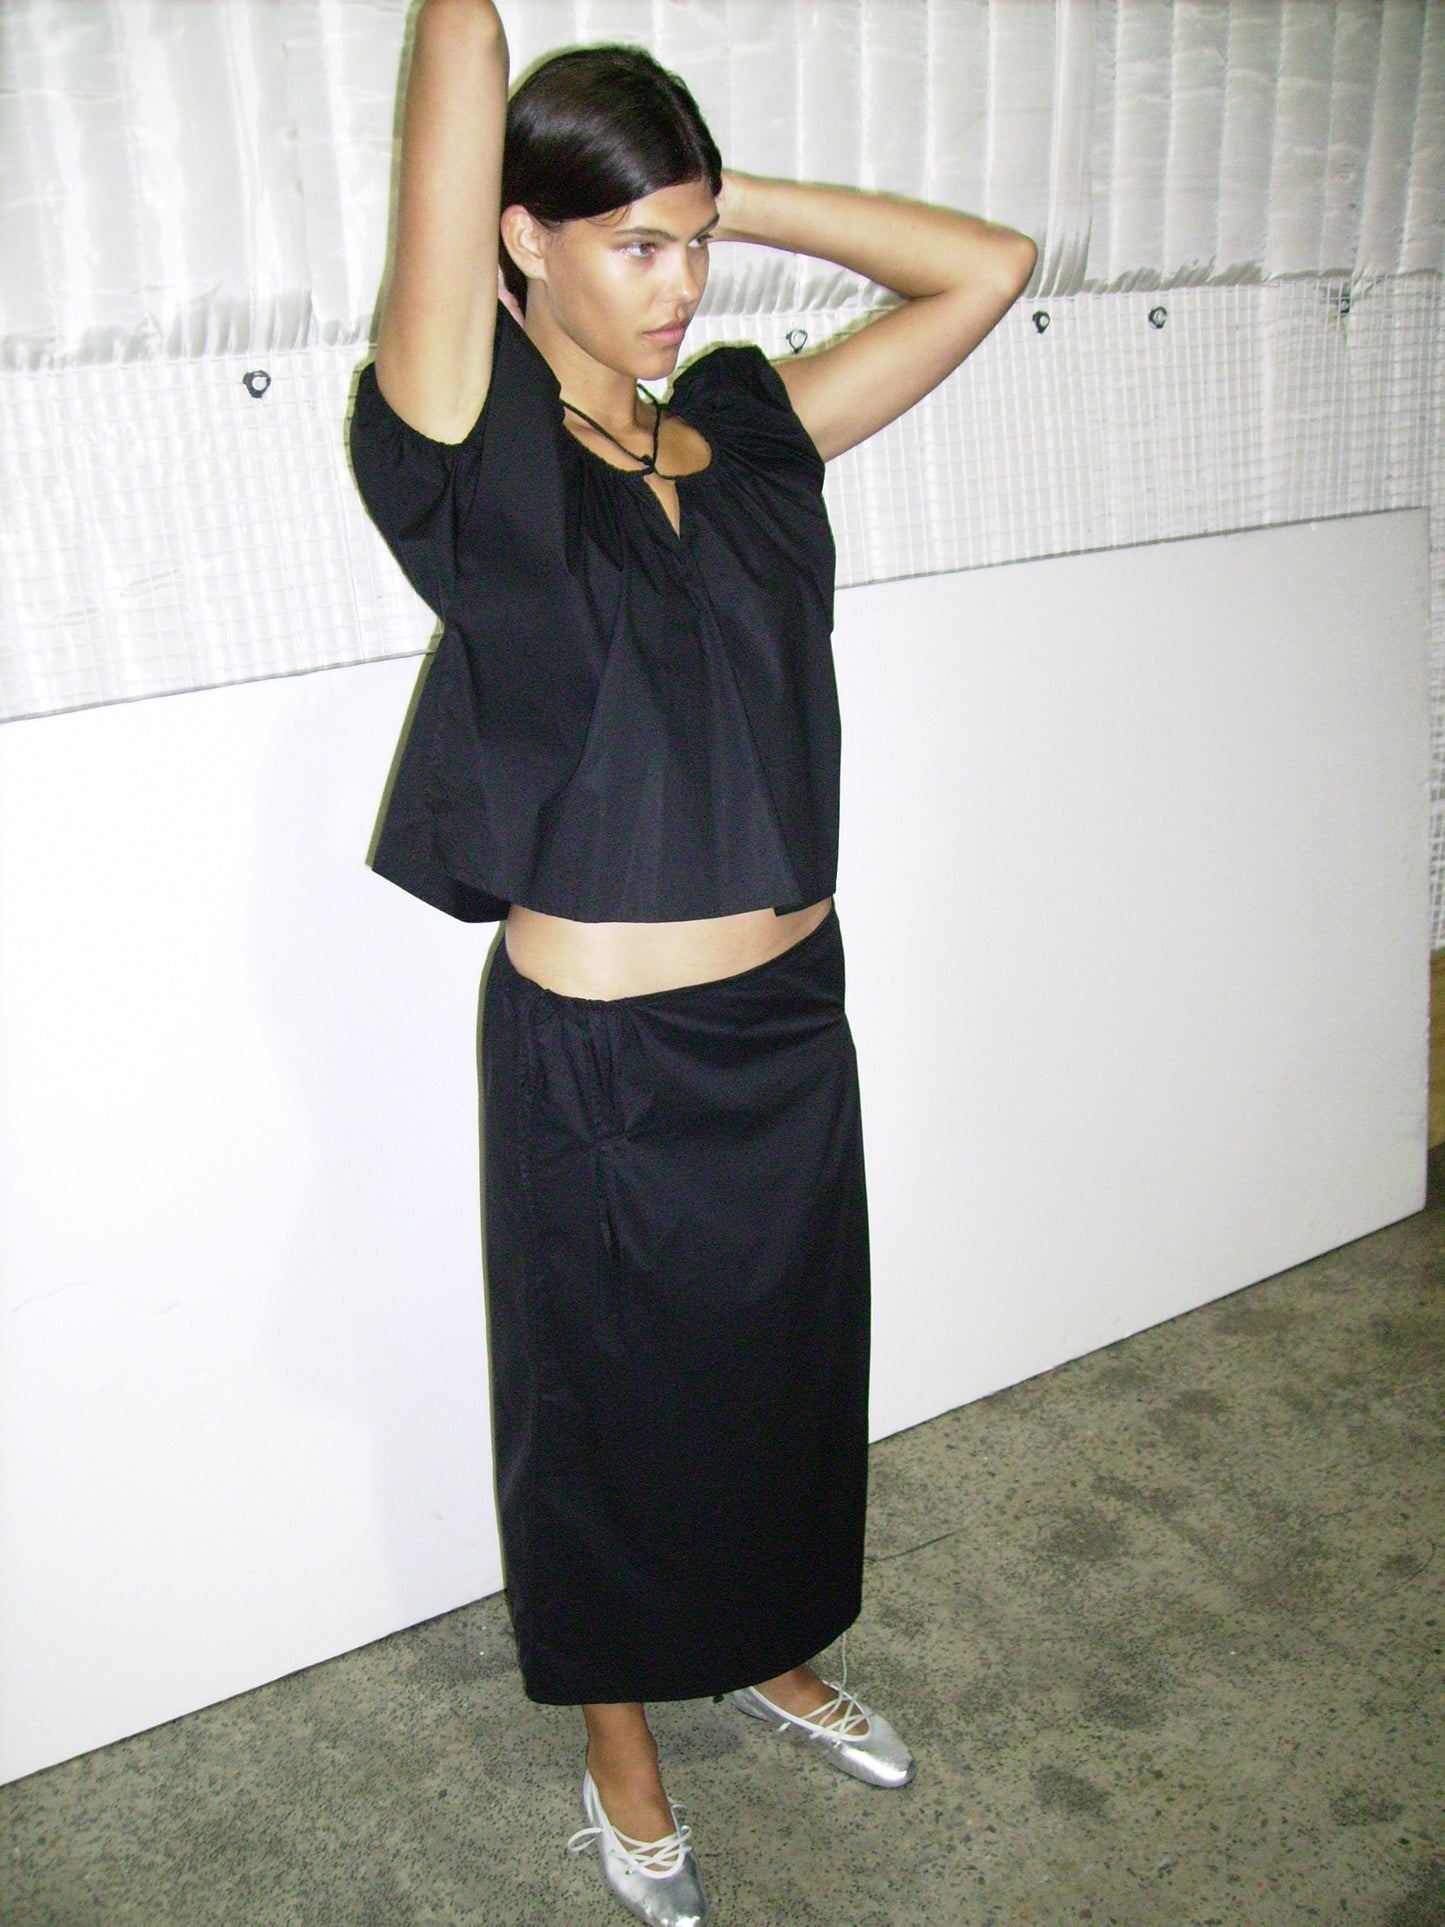 Female model wearing One Panel Top - Black by Deiji Studios against plain background